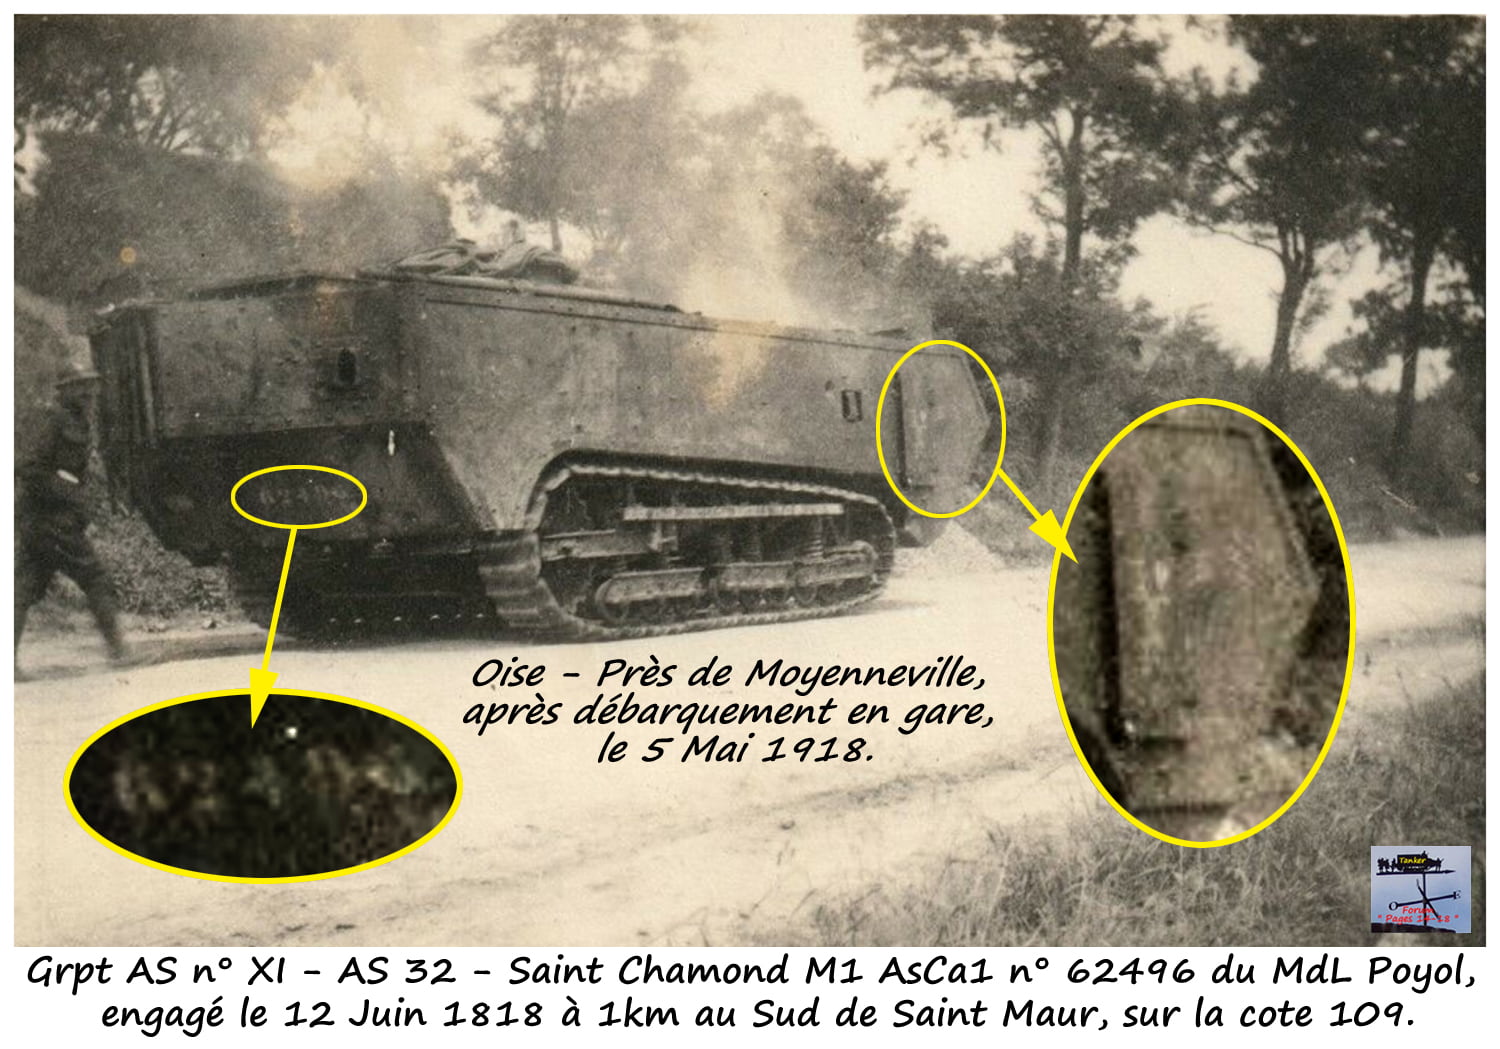 Grpt XI - AS 32 -St Chamond M1 AsCa4 n° 62496 (01)-min.jpg